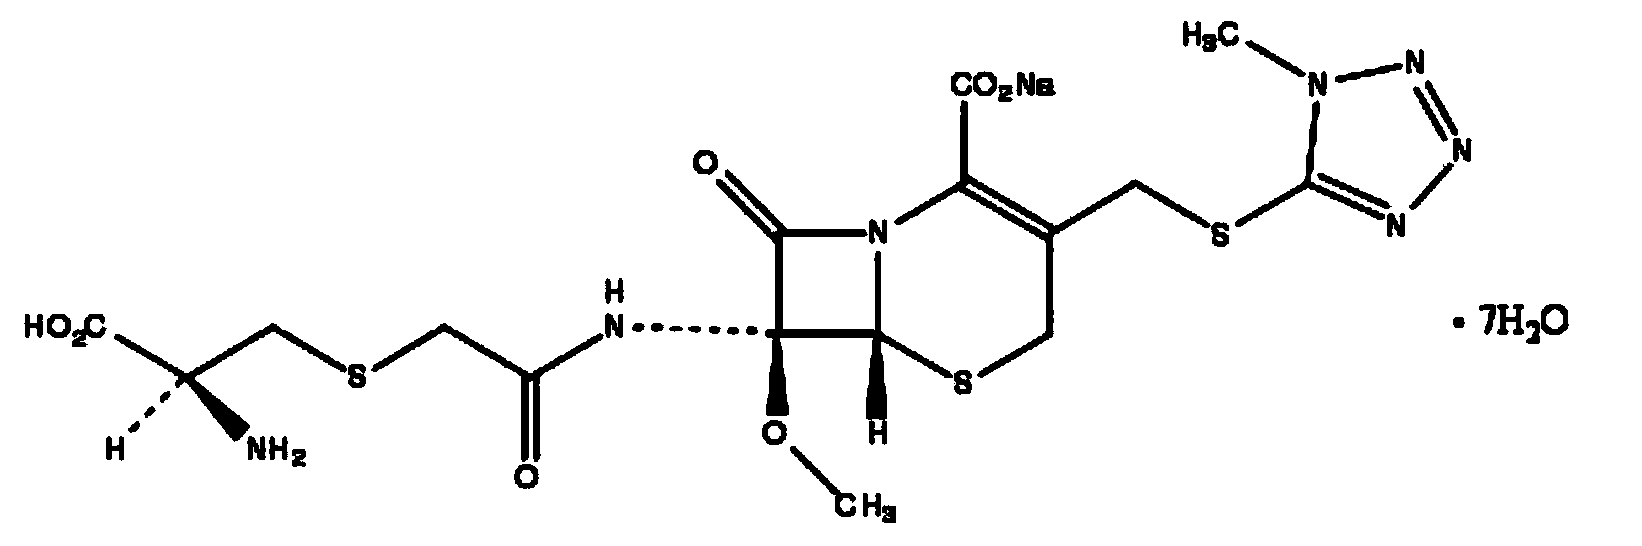 Cefminox sodium crystal form compound